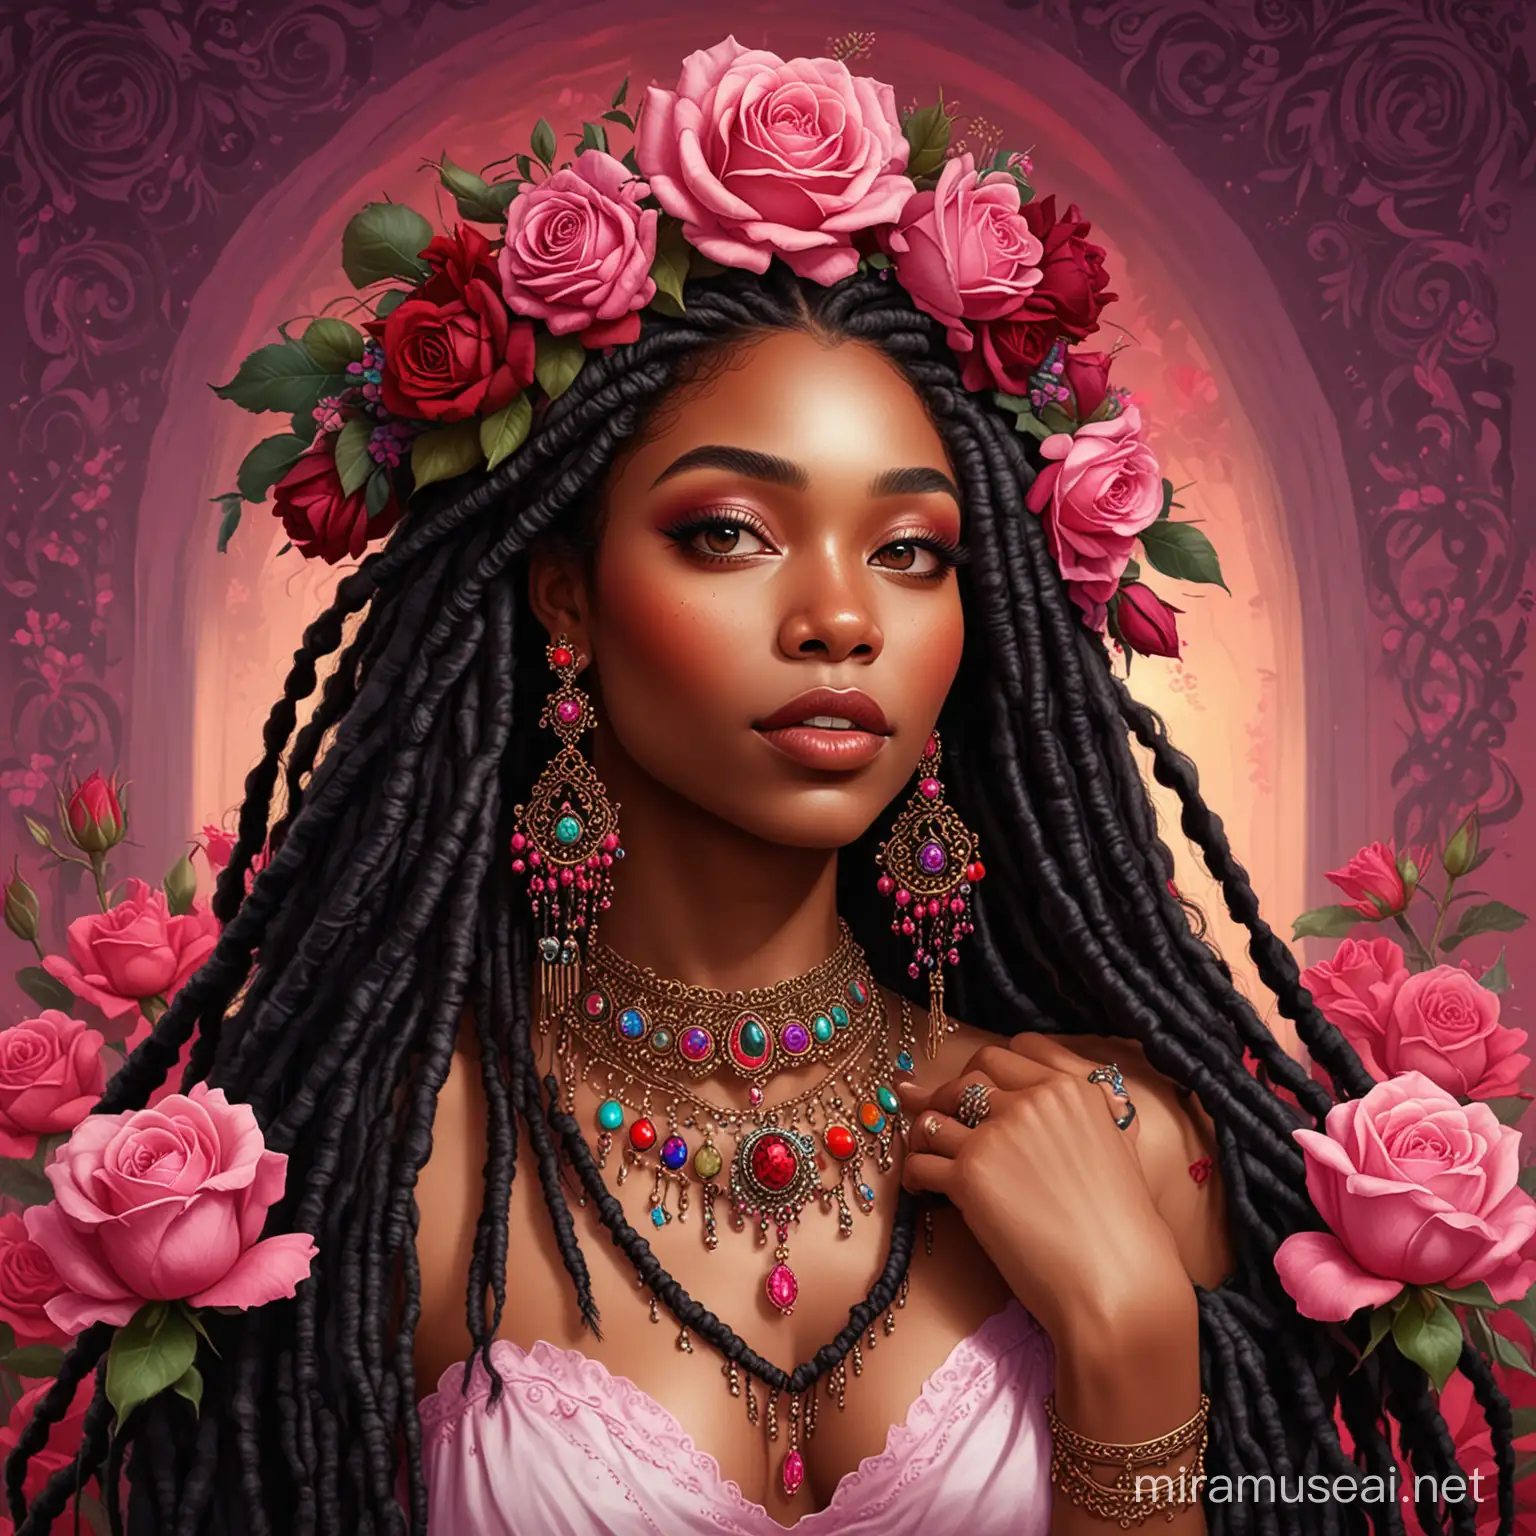 Vibrant Portrait of Beautiful Black Woman with Burgundy Dreadlocks and Ornate Jewelry